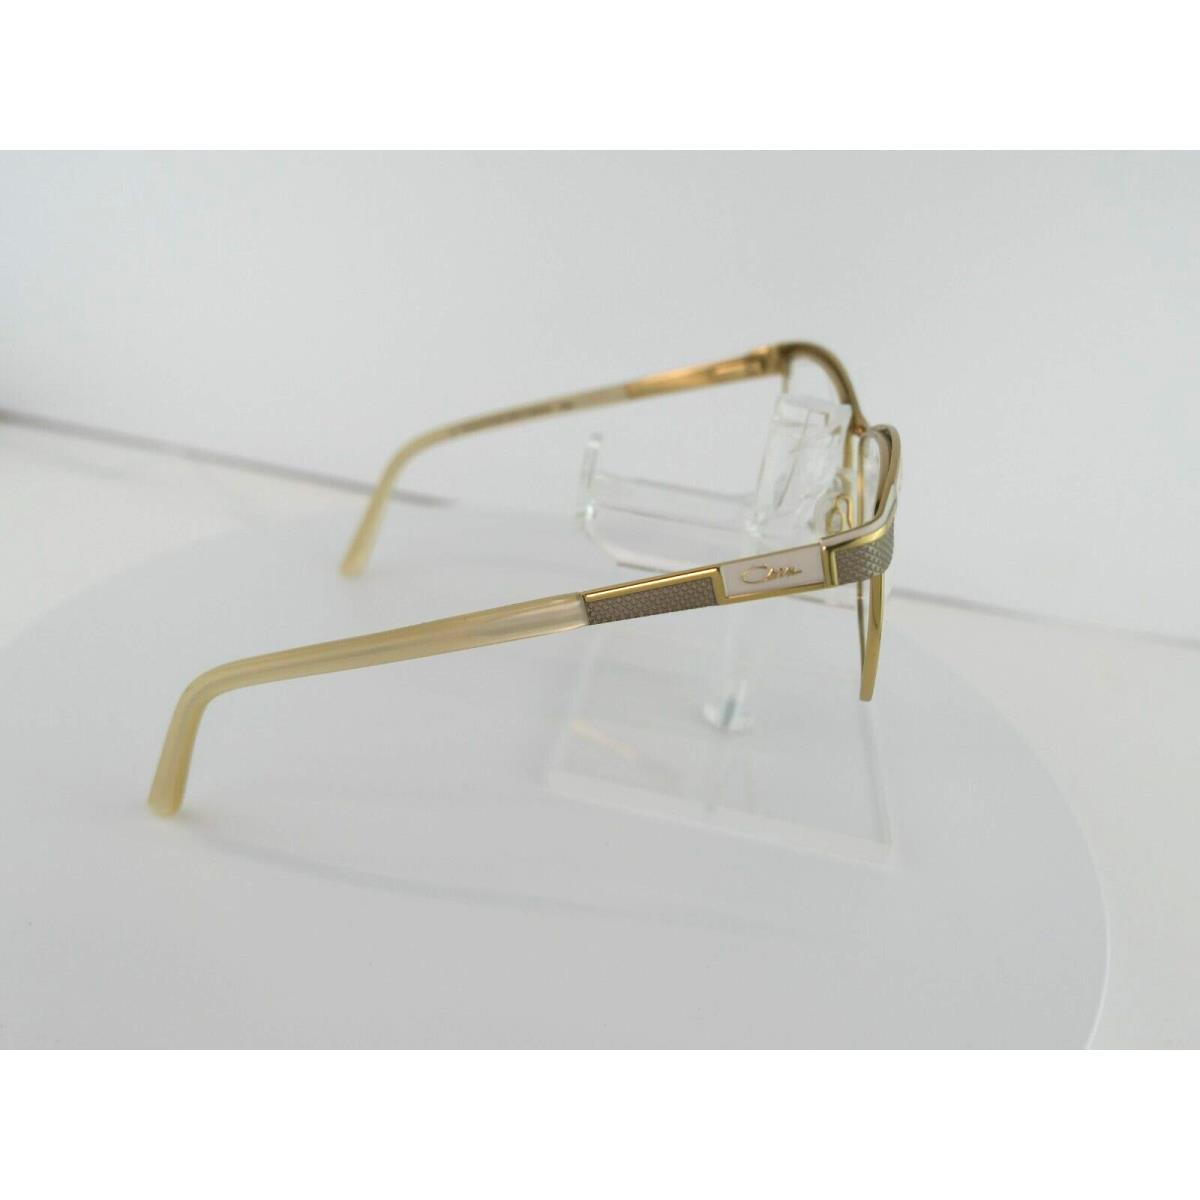 Cazal eyeglasses  - Frame: 6